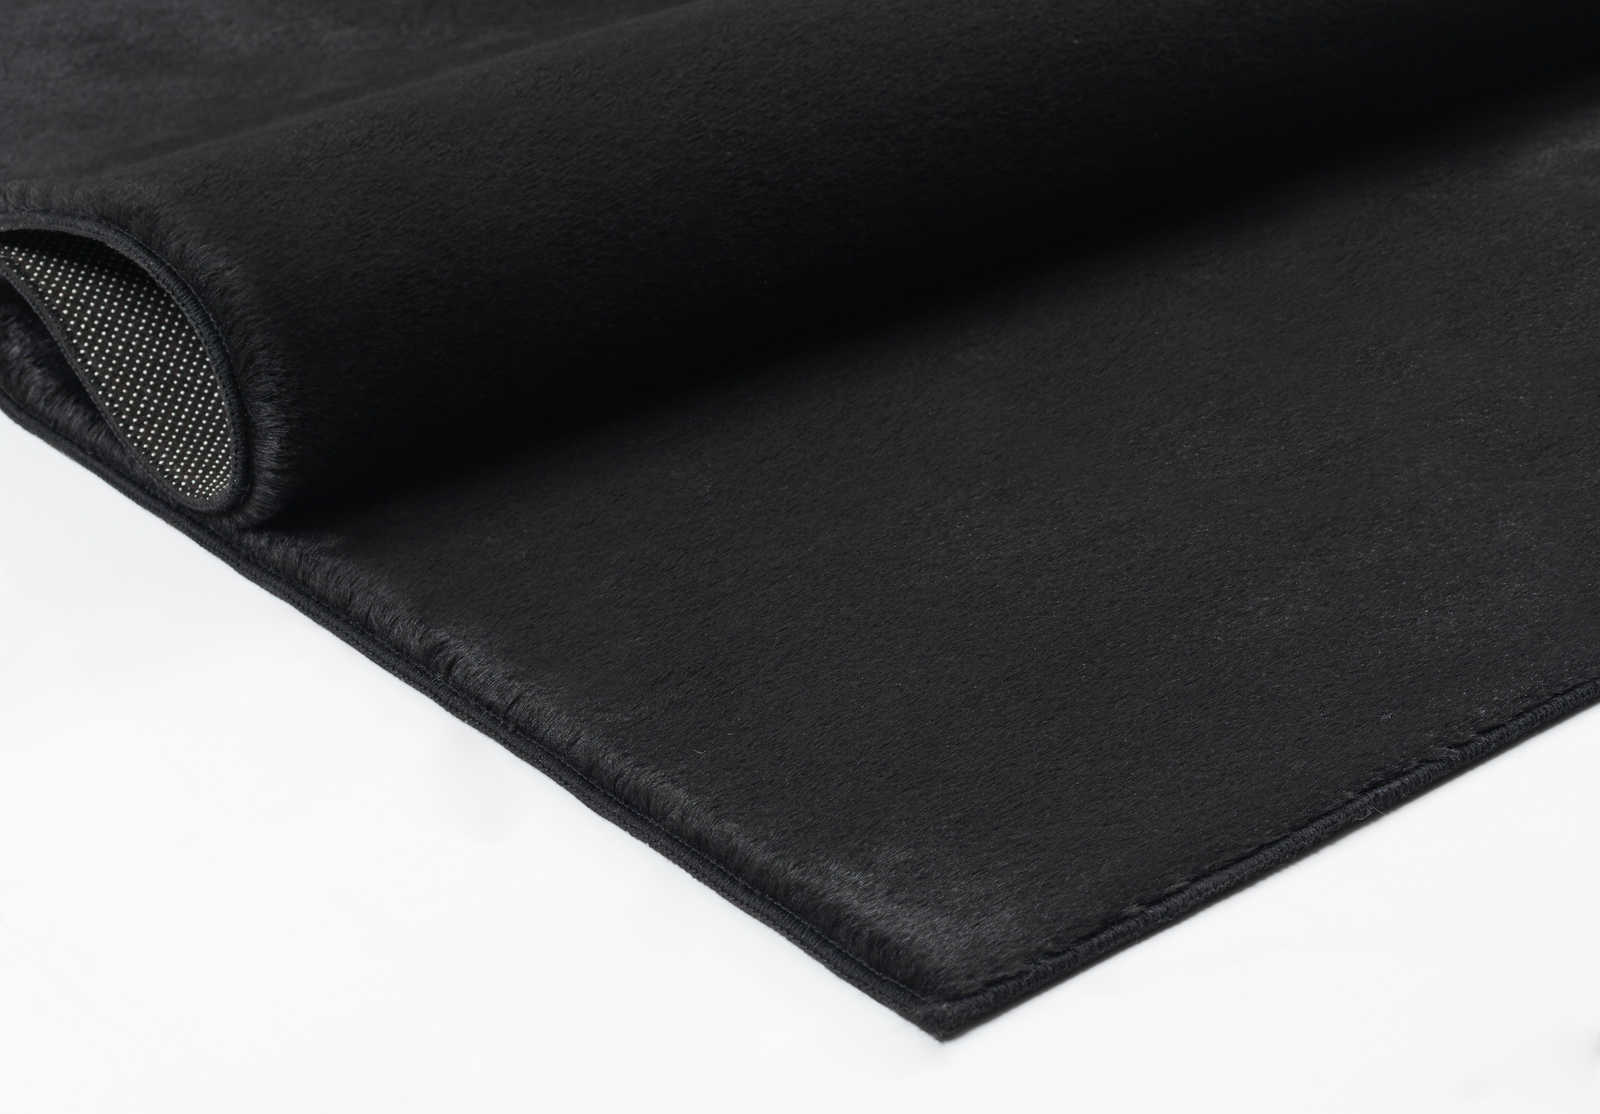             Knuffelzacht hoogpolig tapijt in zwart - 200 x 140 cm
        